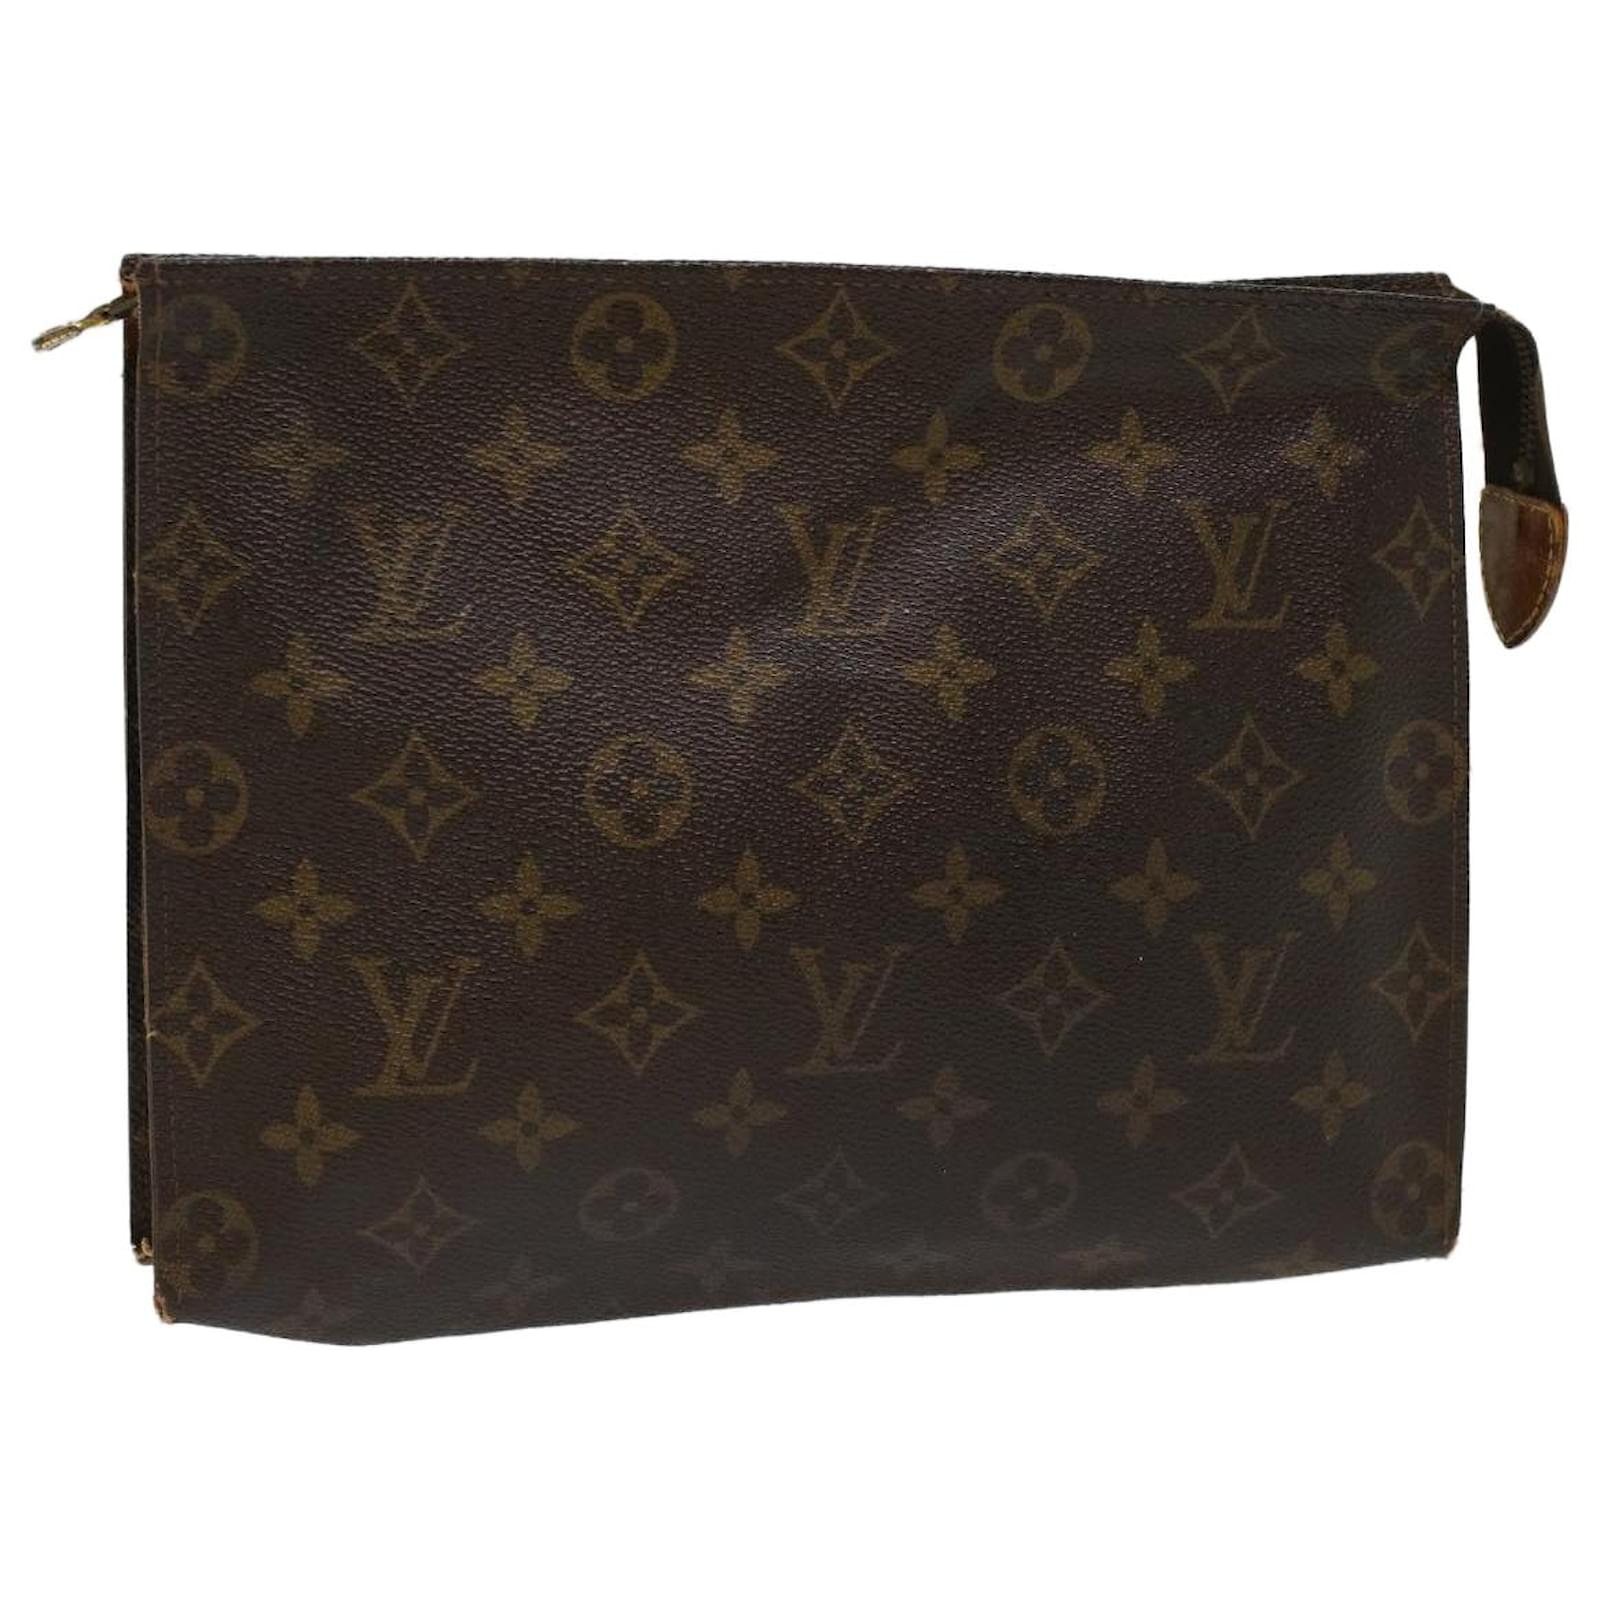 Louis Vuitton Clutch Bags & Louis Vuitton Pochette Handbags for Women | eBay